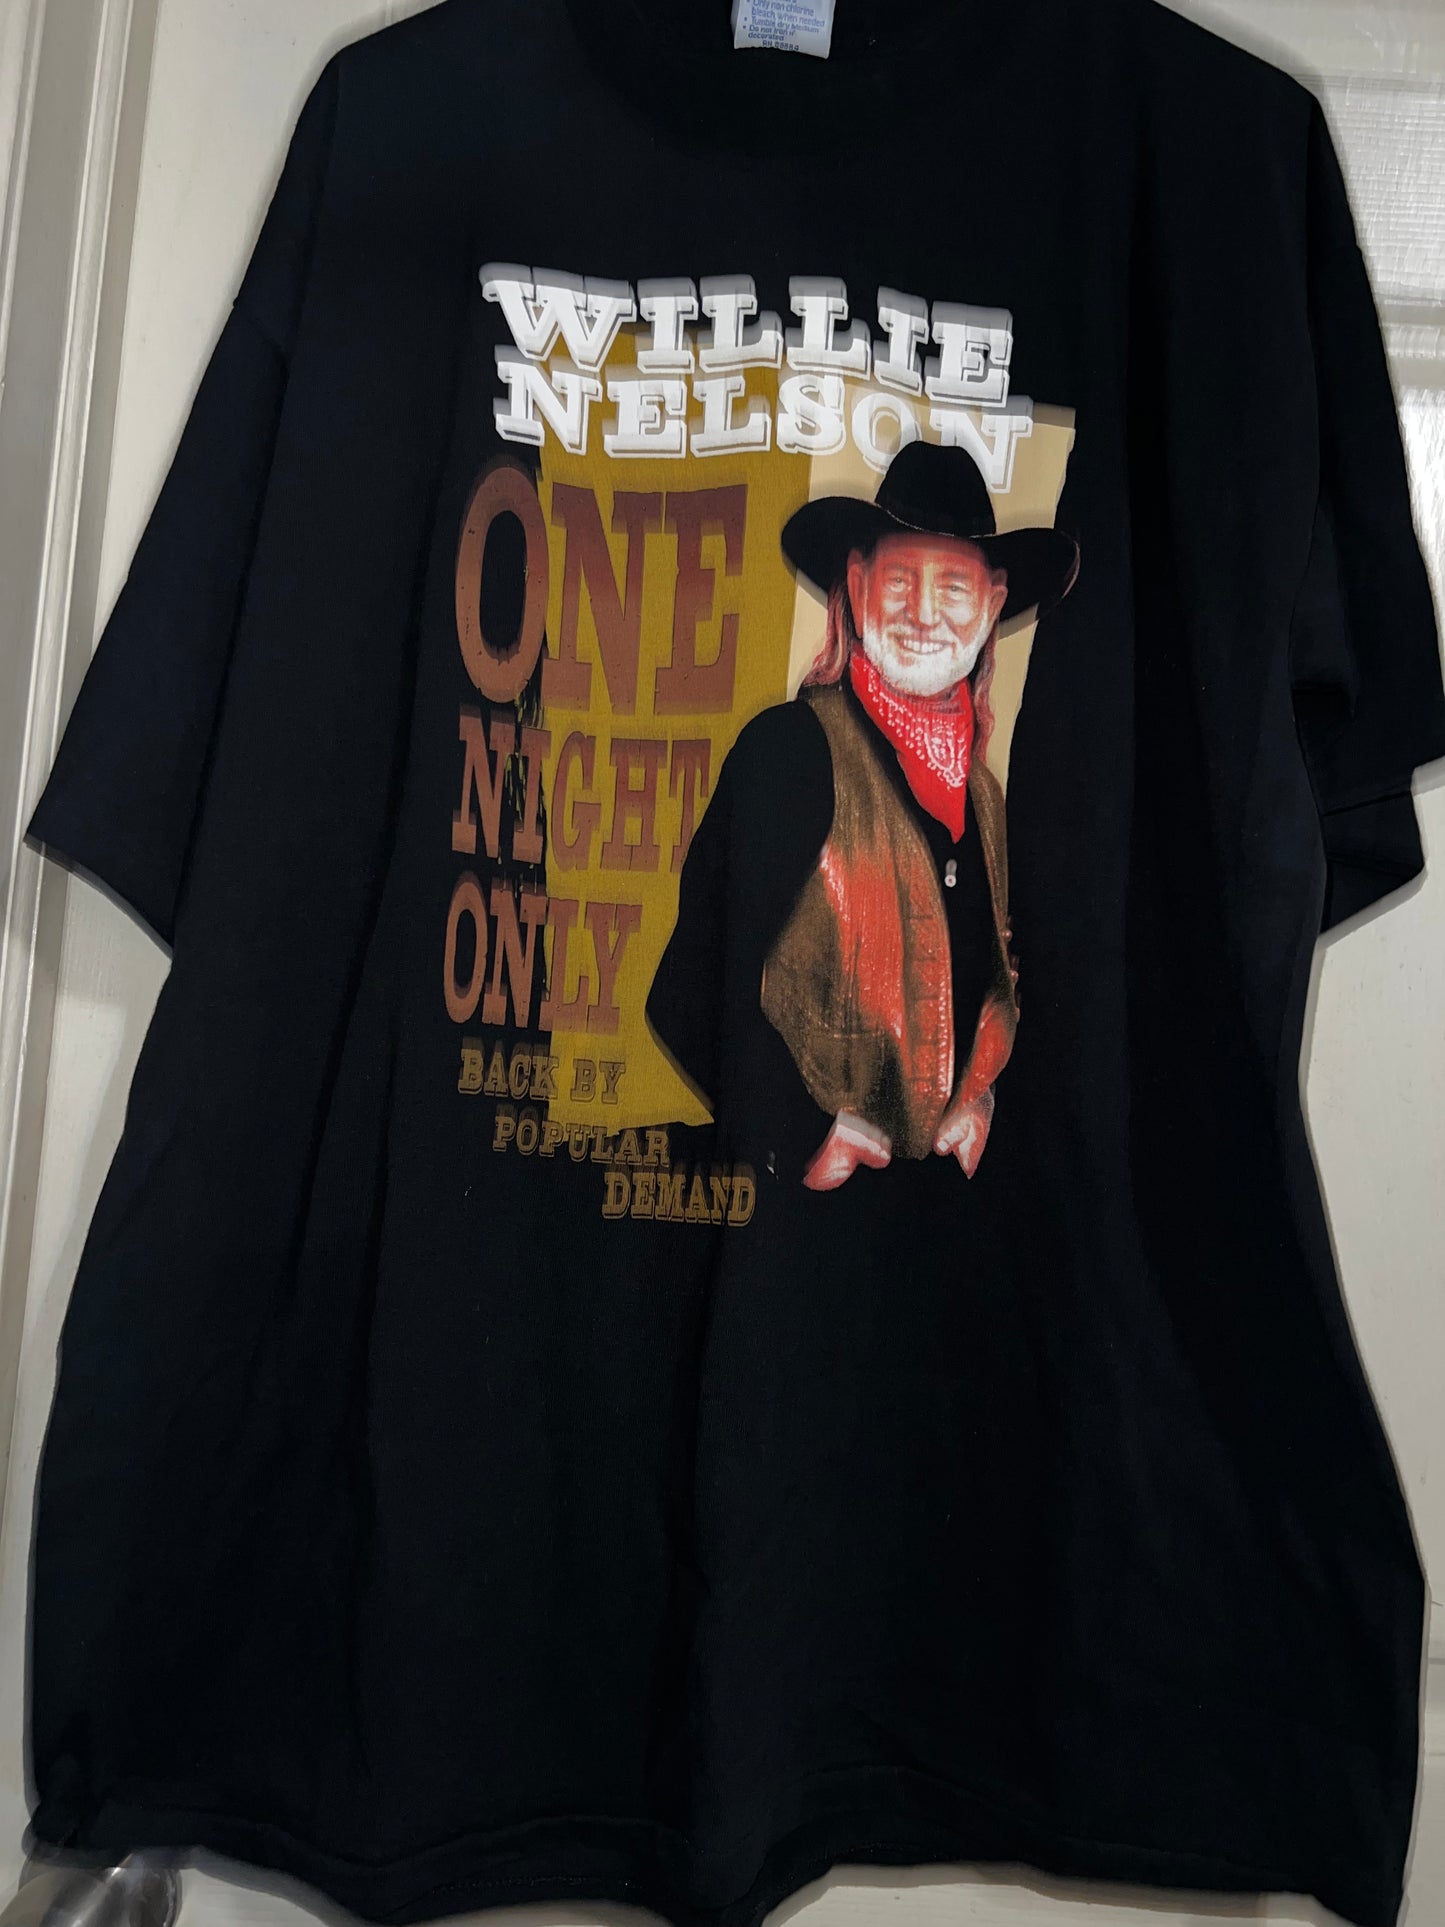 Vintage Willie Nelson Oversized Tee